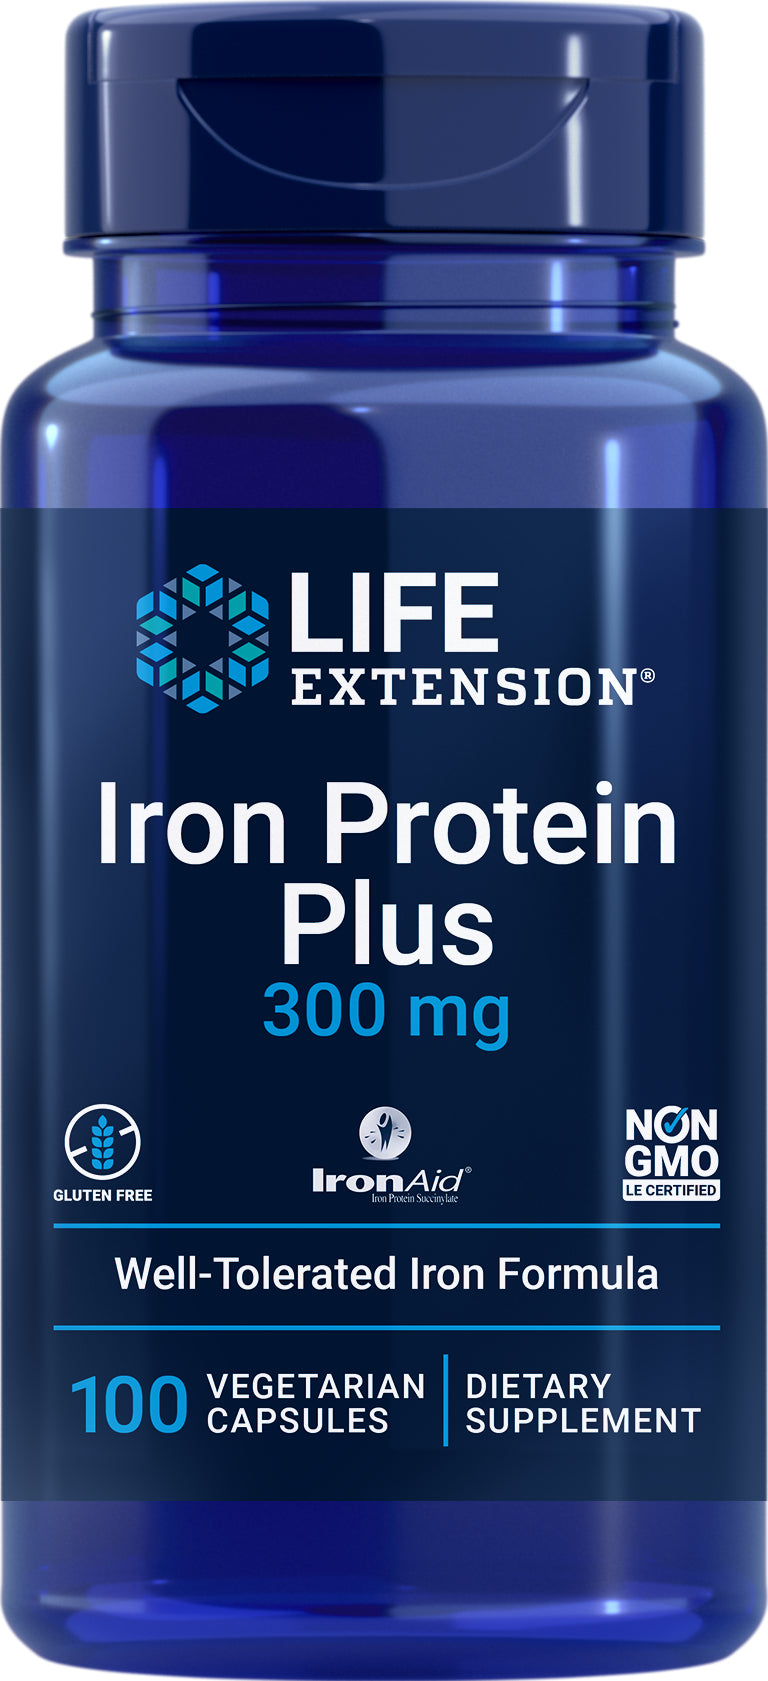 Iron Protein Plus 300 mg, 100 vegetarian capsules